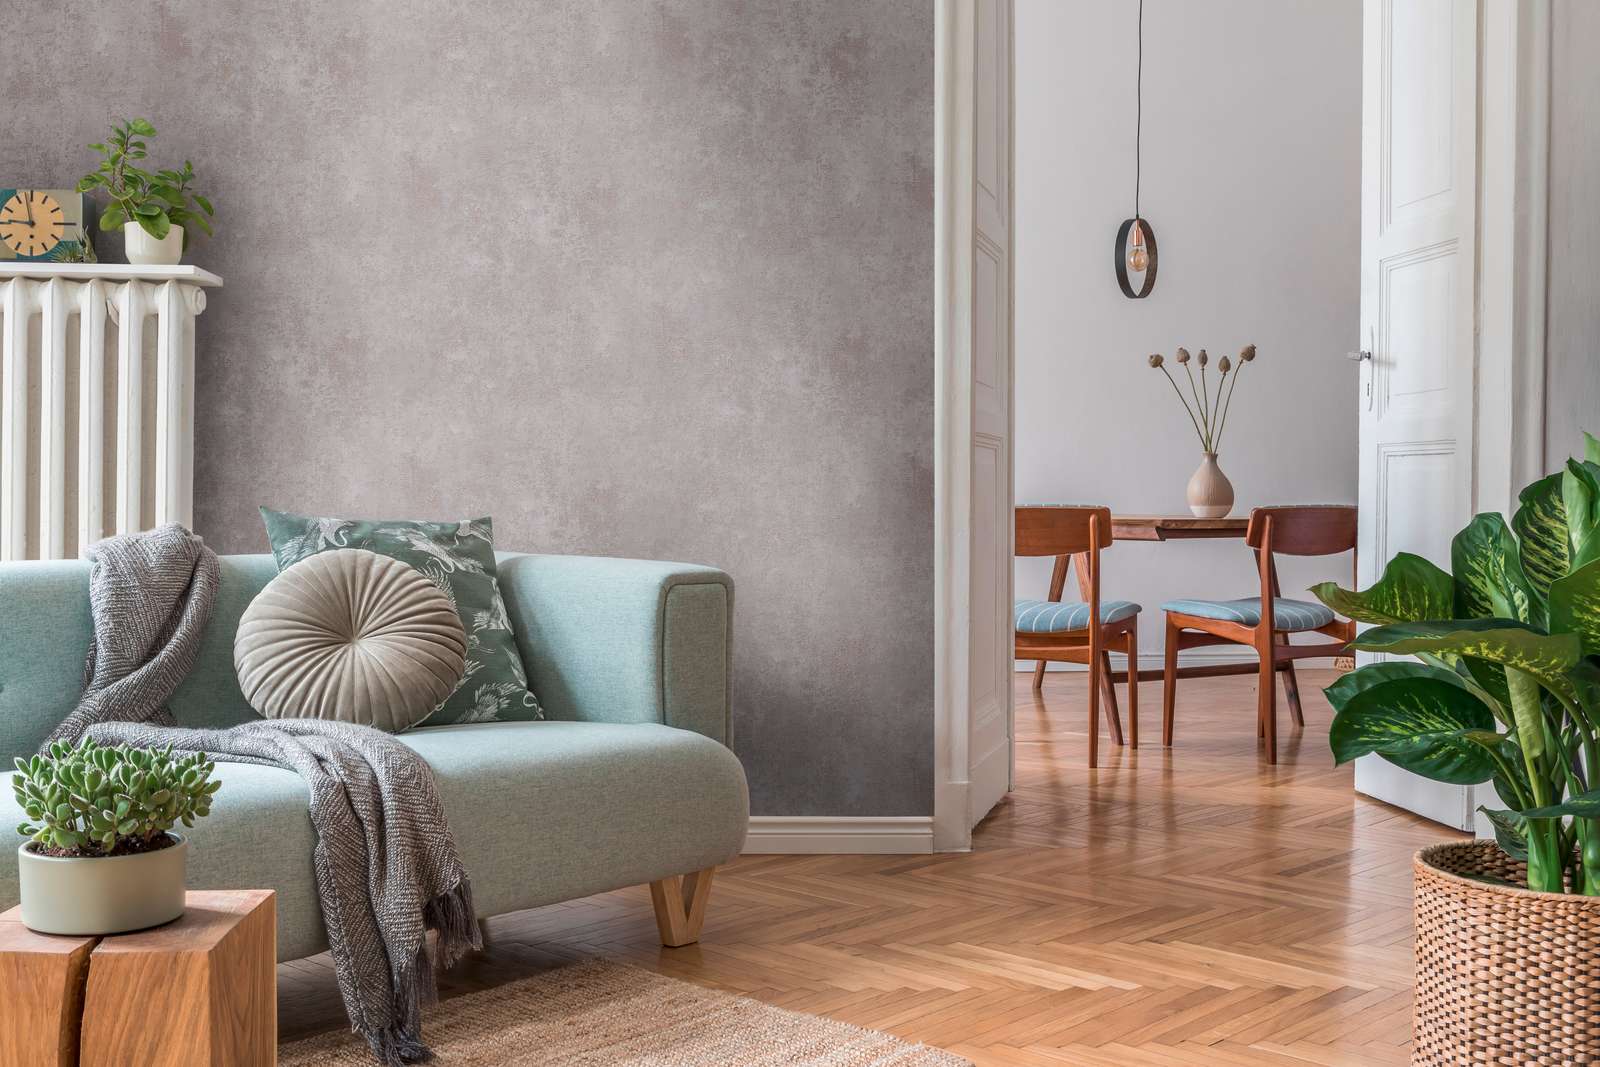             Grey non-woven wallpaper with metallic texture effect
        